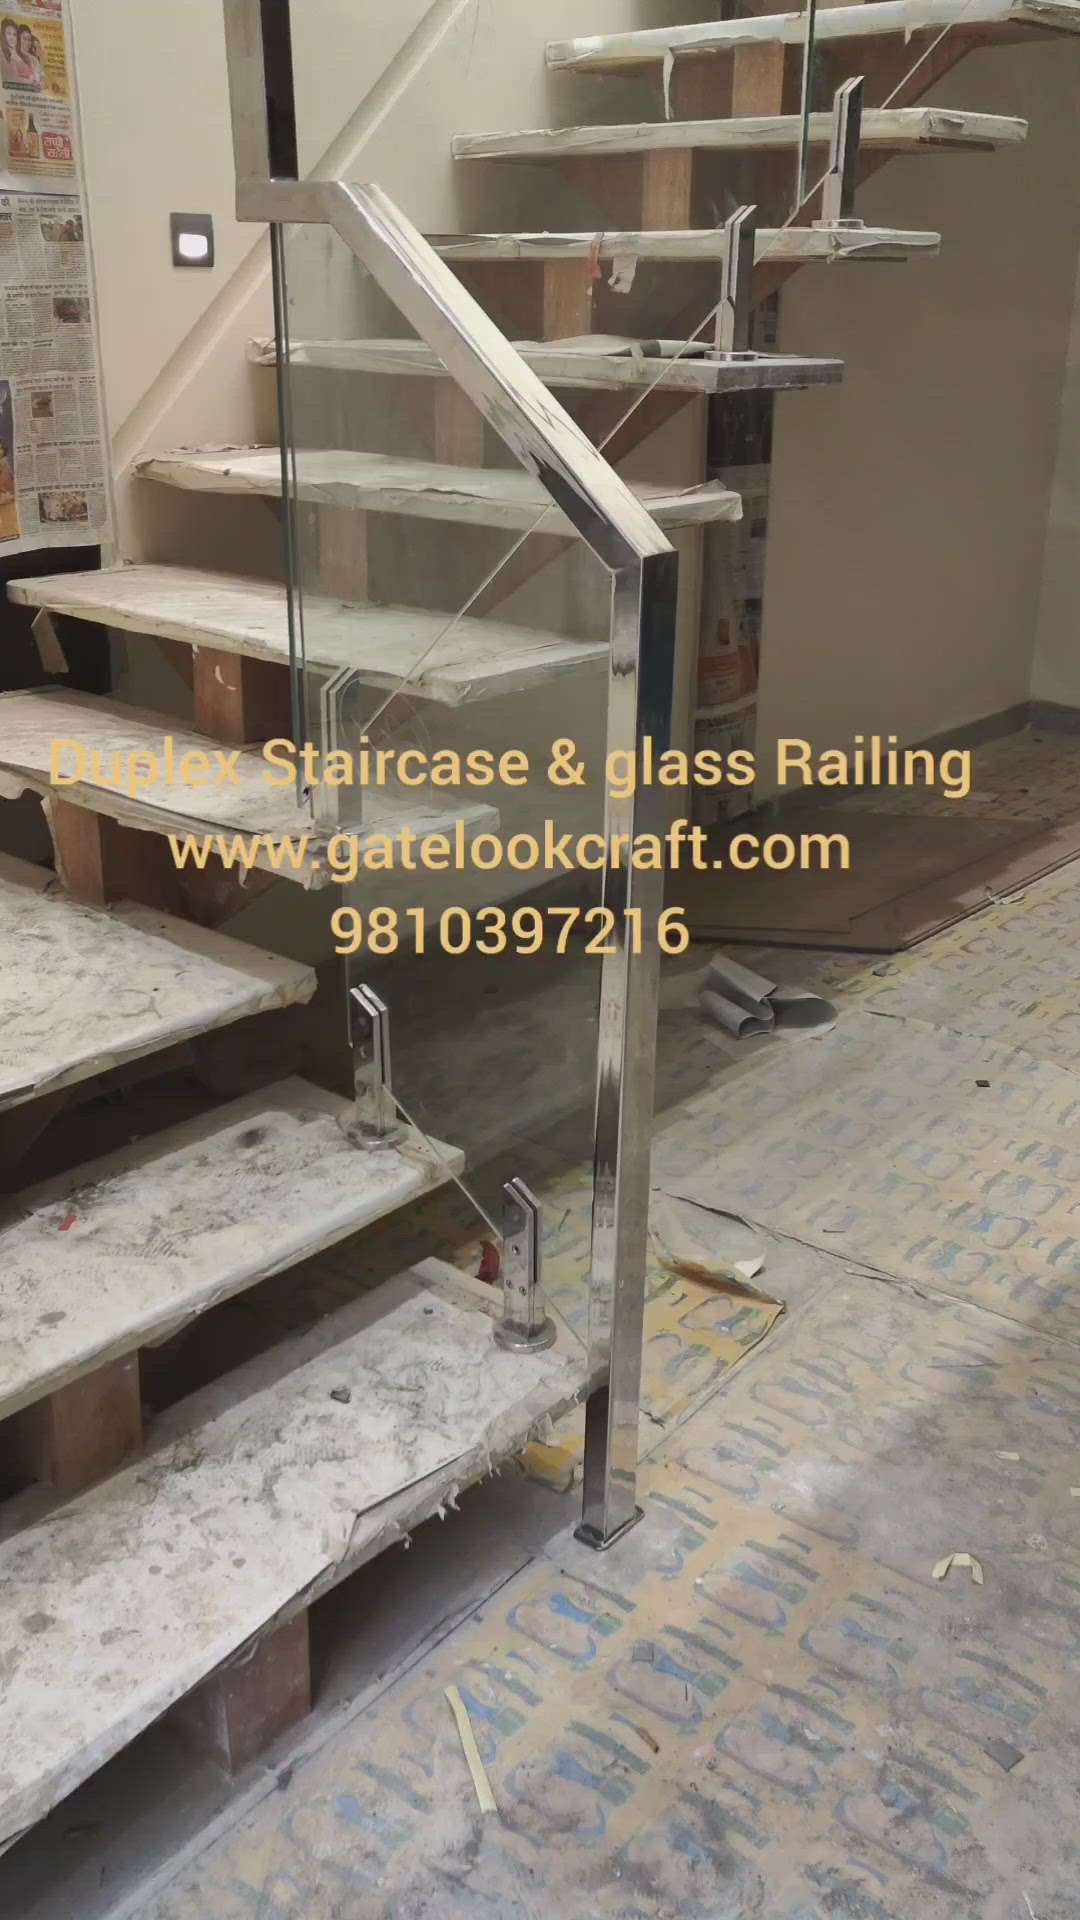 Duplex Staircase glass Railing by Hibza sterling interiors pvt ltd #gatelookcraft #staircaserailing #glassrailing #railingdesing #staircase #steel #aluminiumprofilegate #aluminiumprofilecladding